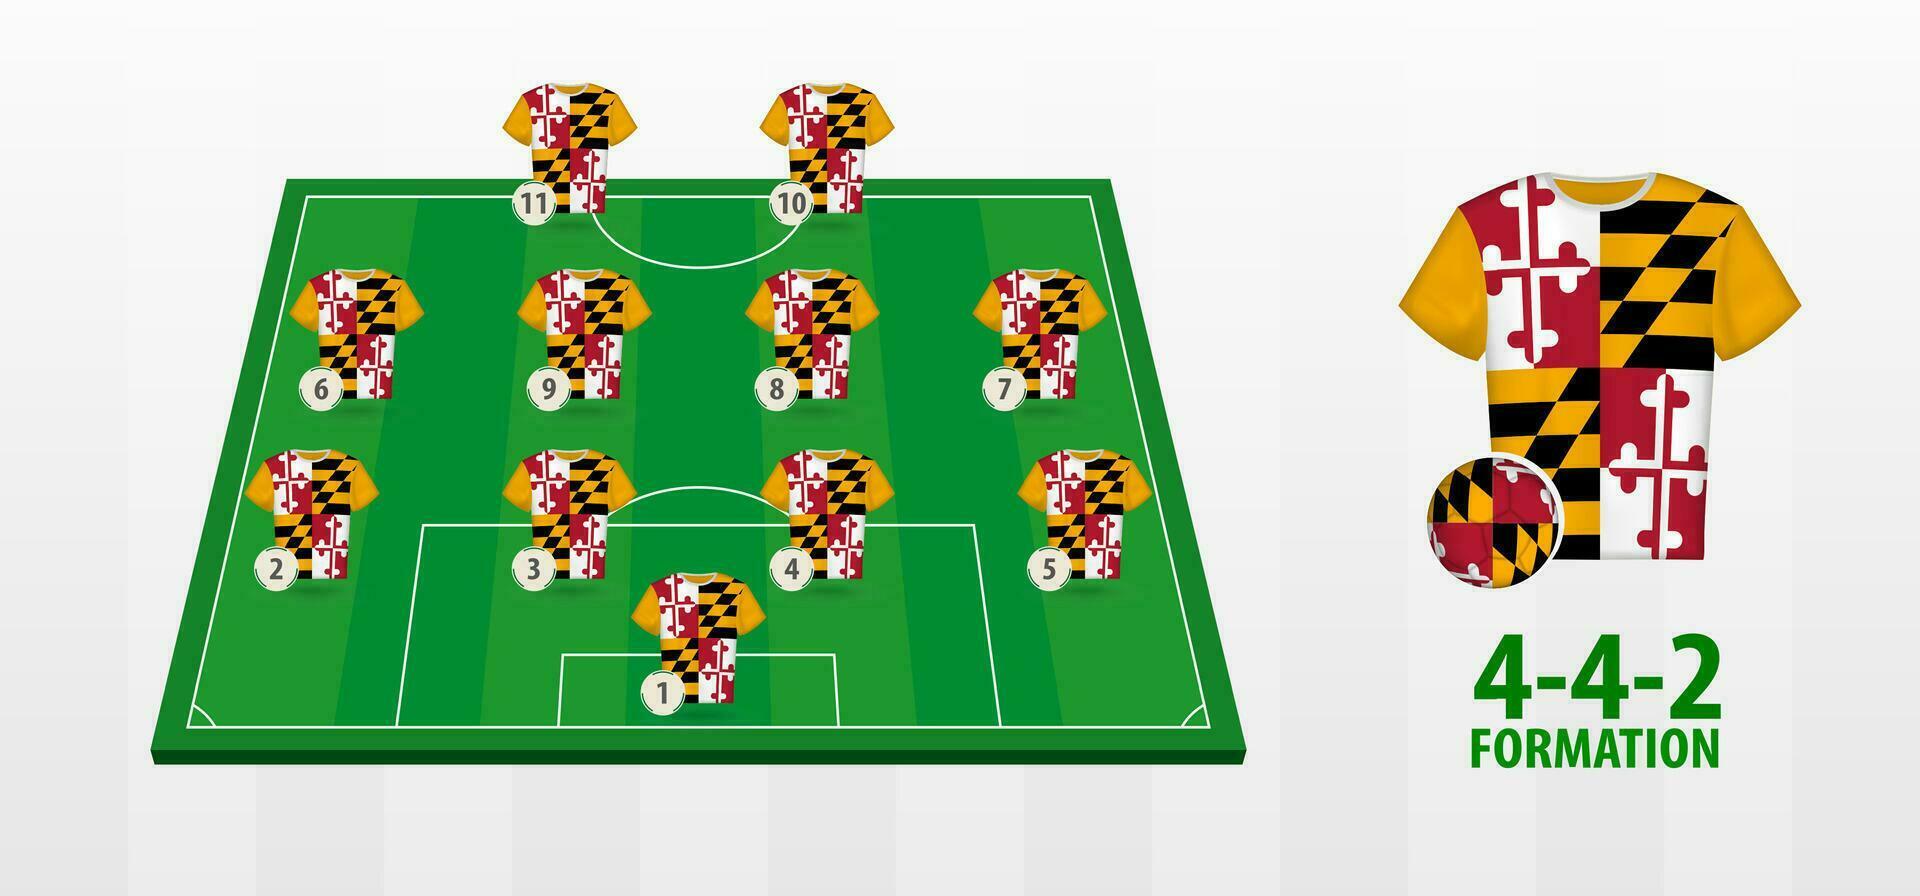 Maryland National Football Team Formation on Football Field. vector